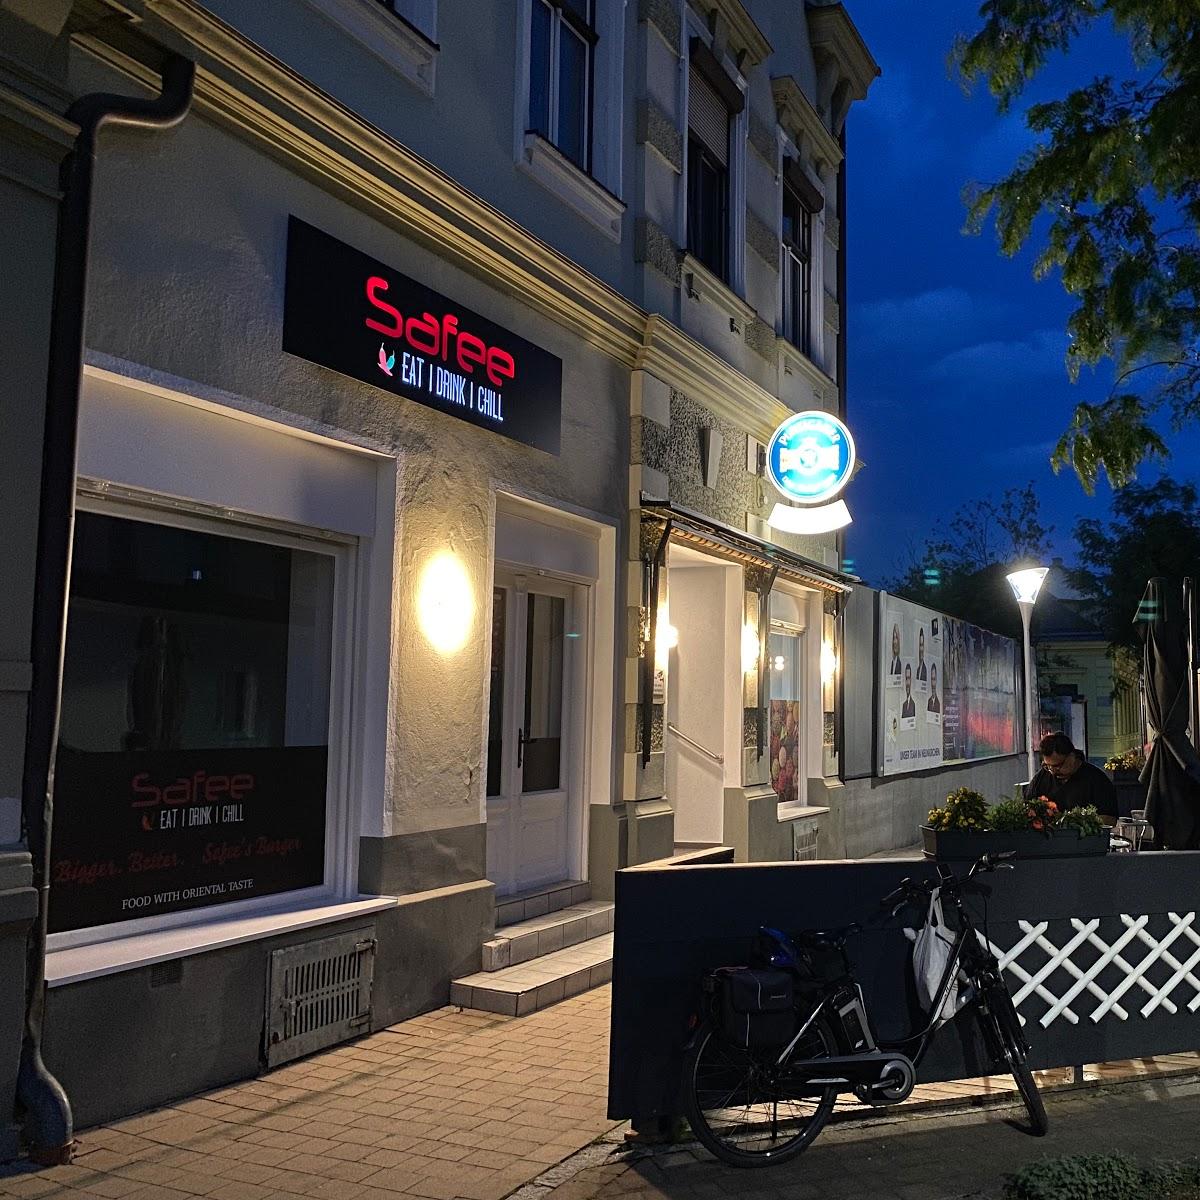 Restaurant "Safee‘s Cafe & Bar" in Gloggnitz